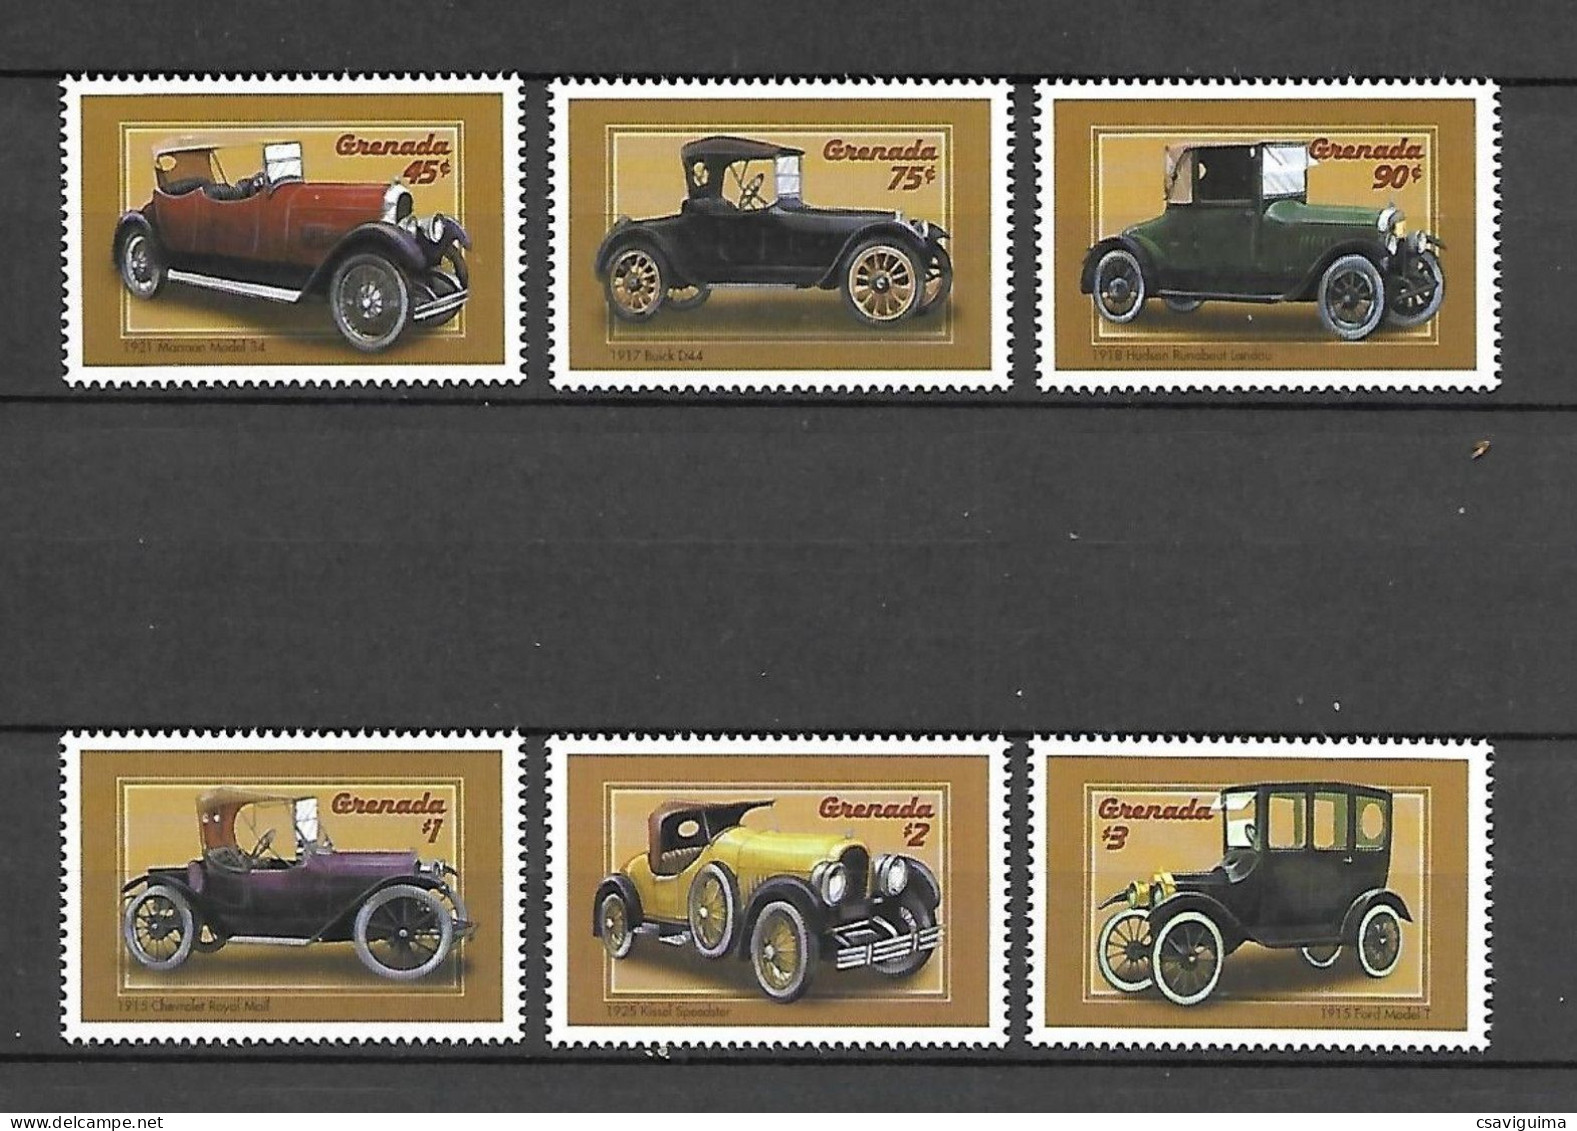 Grenada - 2000 - Classic Cars - Yv 3705/40 - Autos